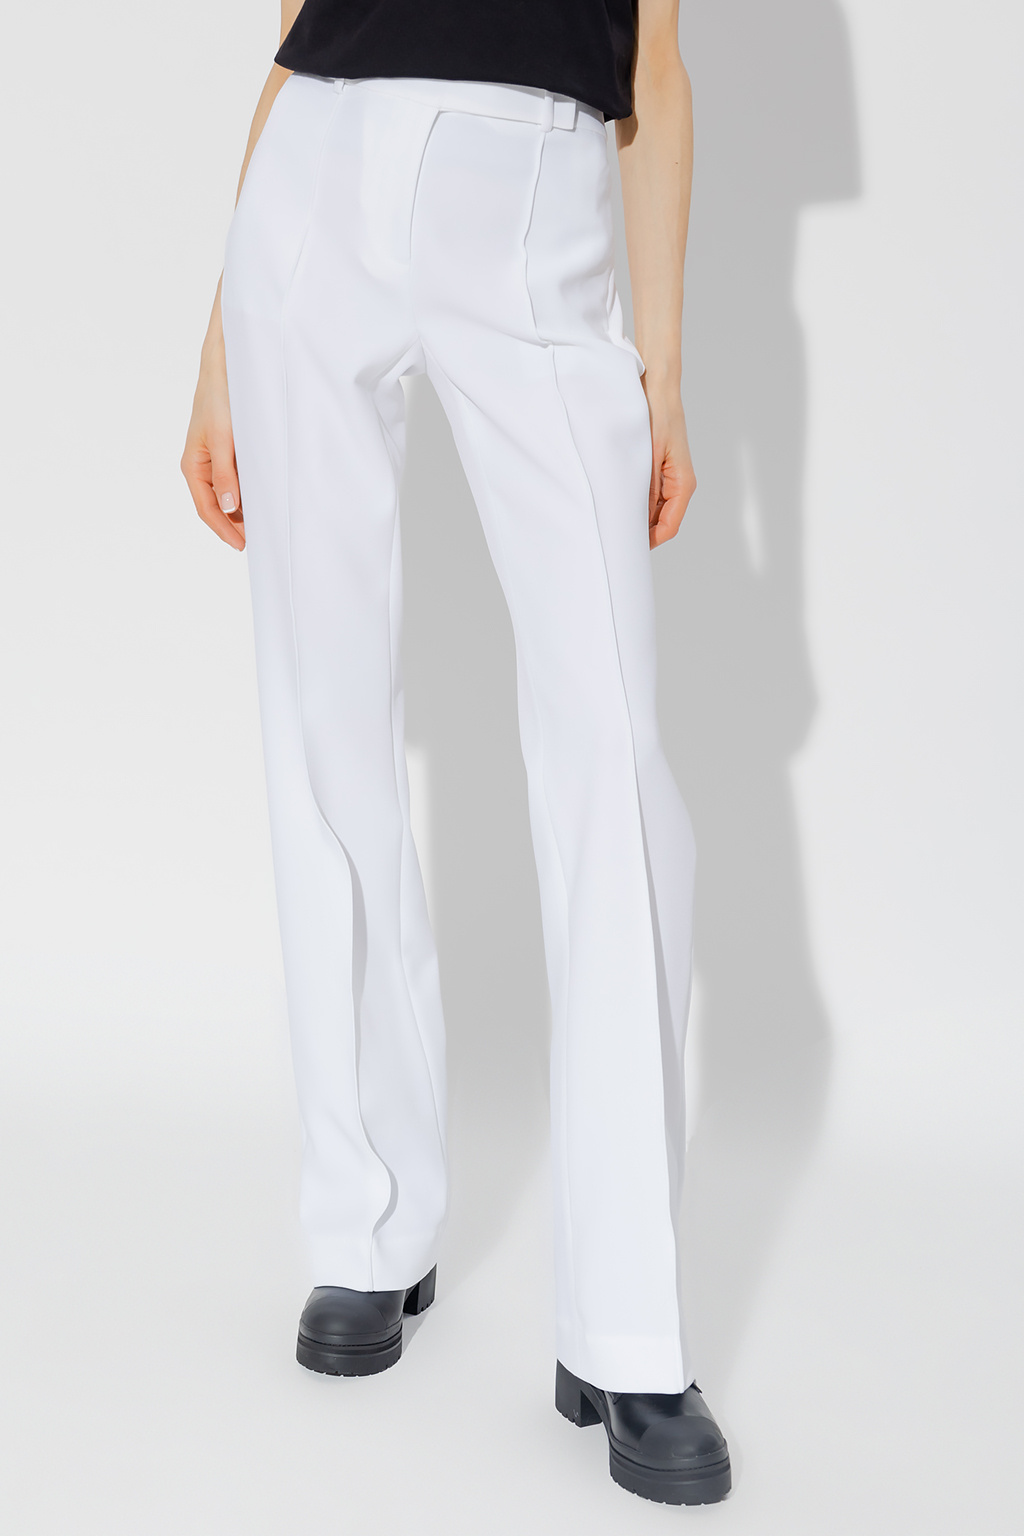 Love Moschino raindrop-print dress Pleat-front trousers